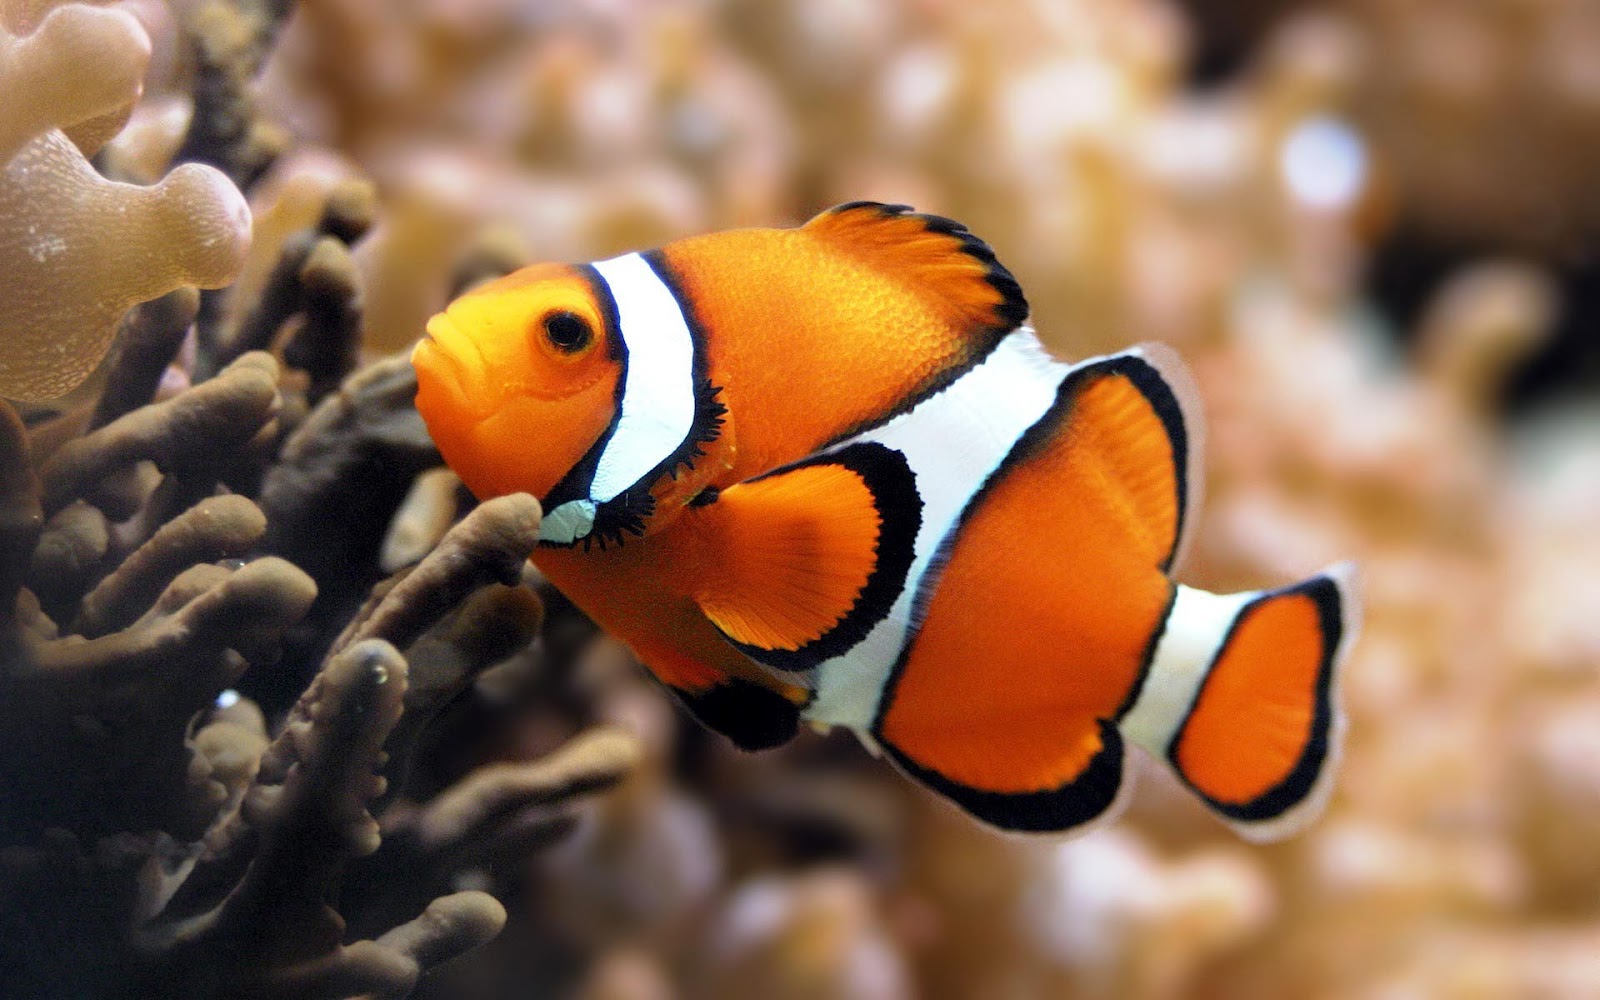  fish wallpaper with a orange tropical fish hd orange fish background